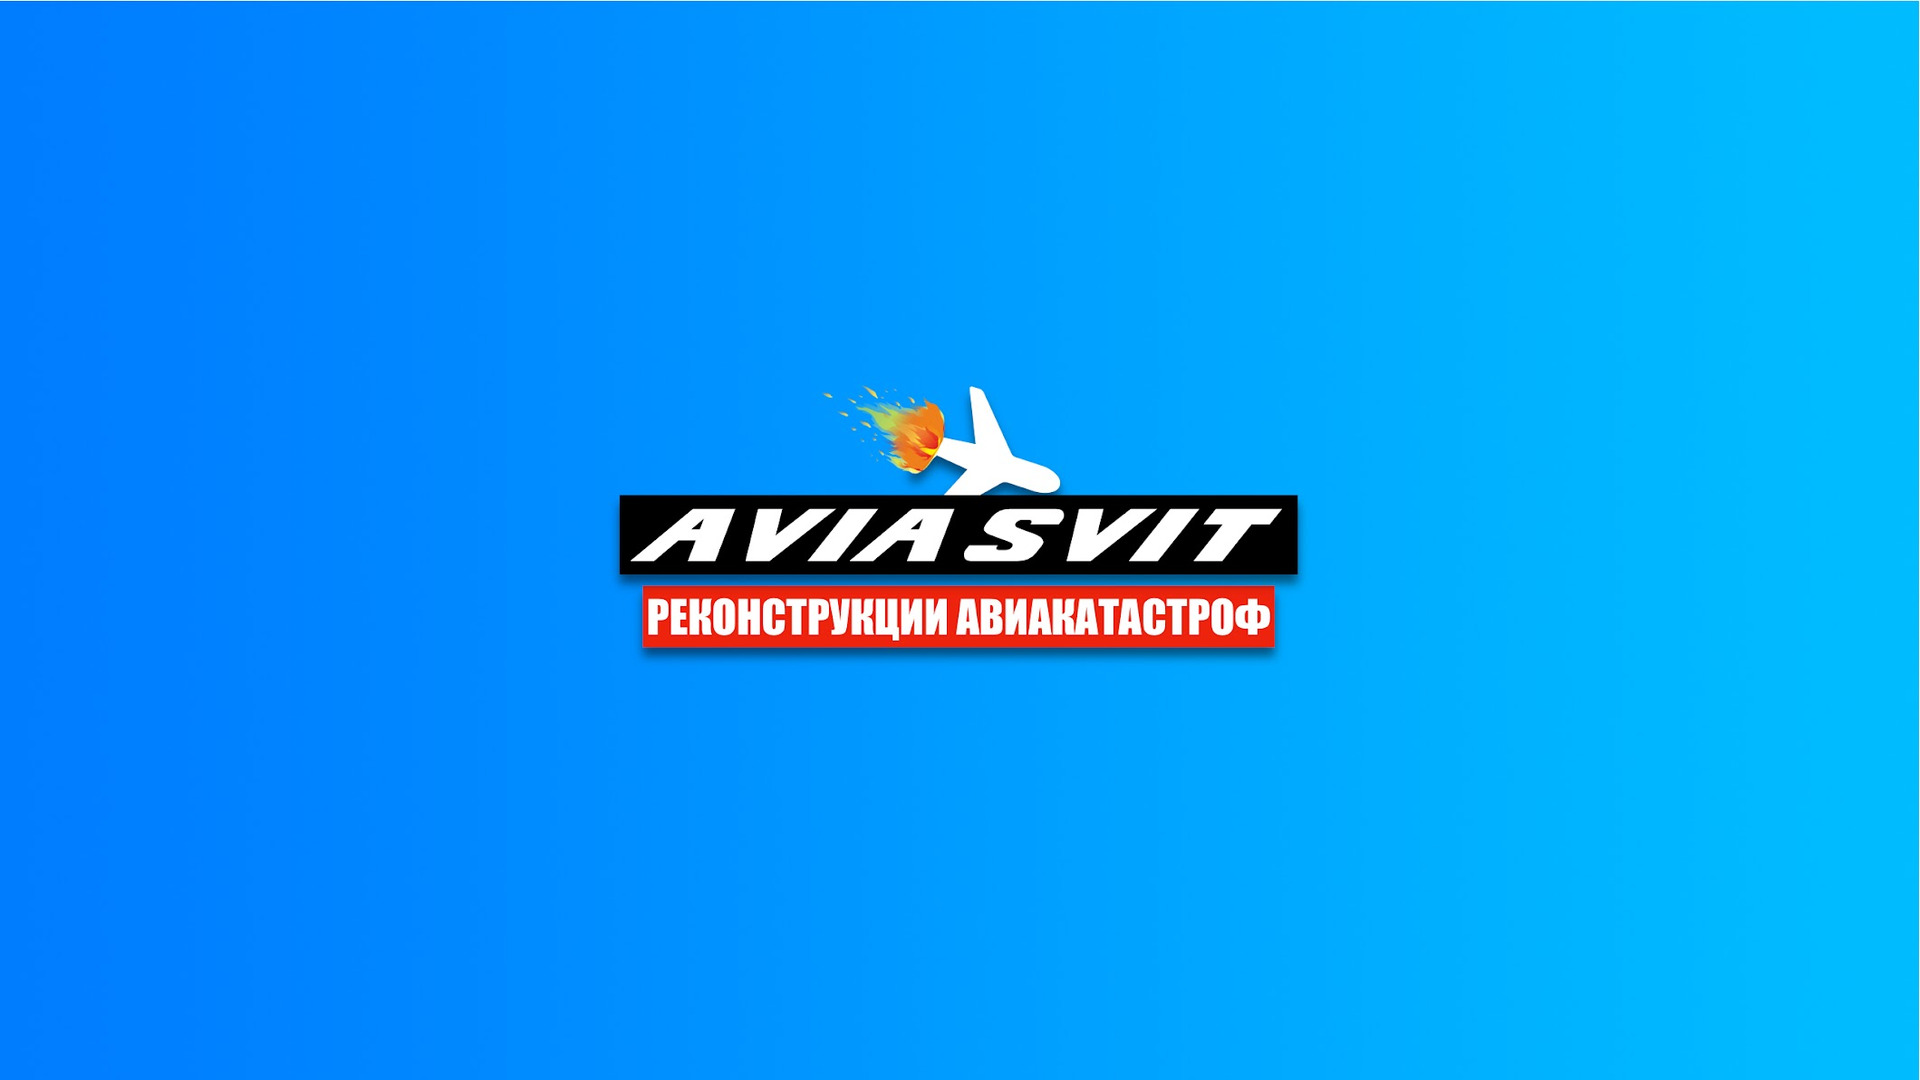 Show AVIA SVIT Реконструкции Авиакатастроф